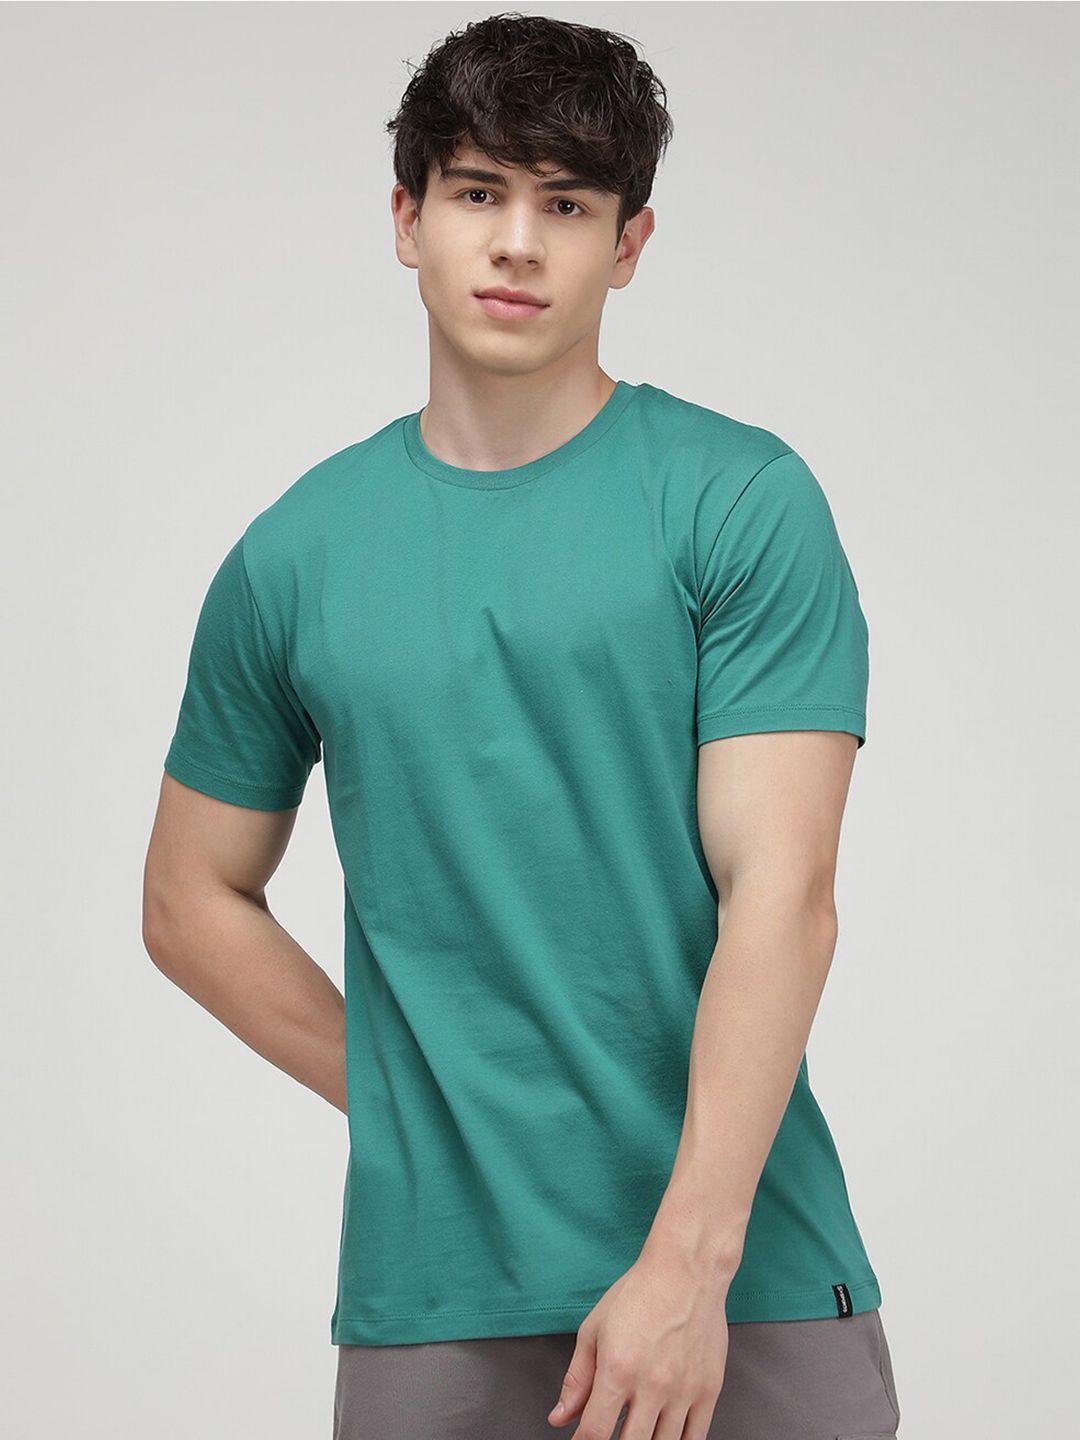 sporto-soft-durable-breathable-everfresh-cotton-t-shirt